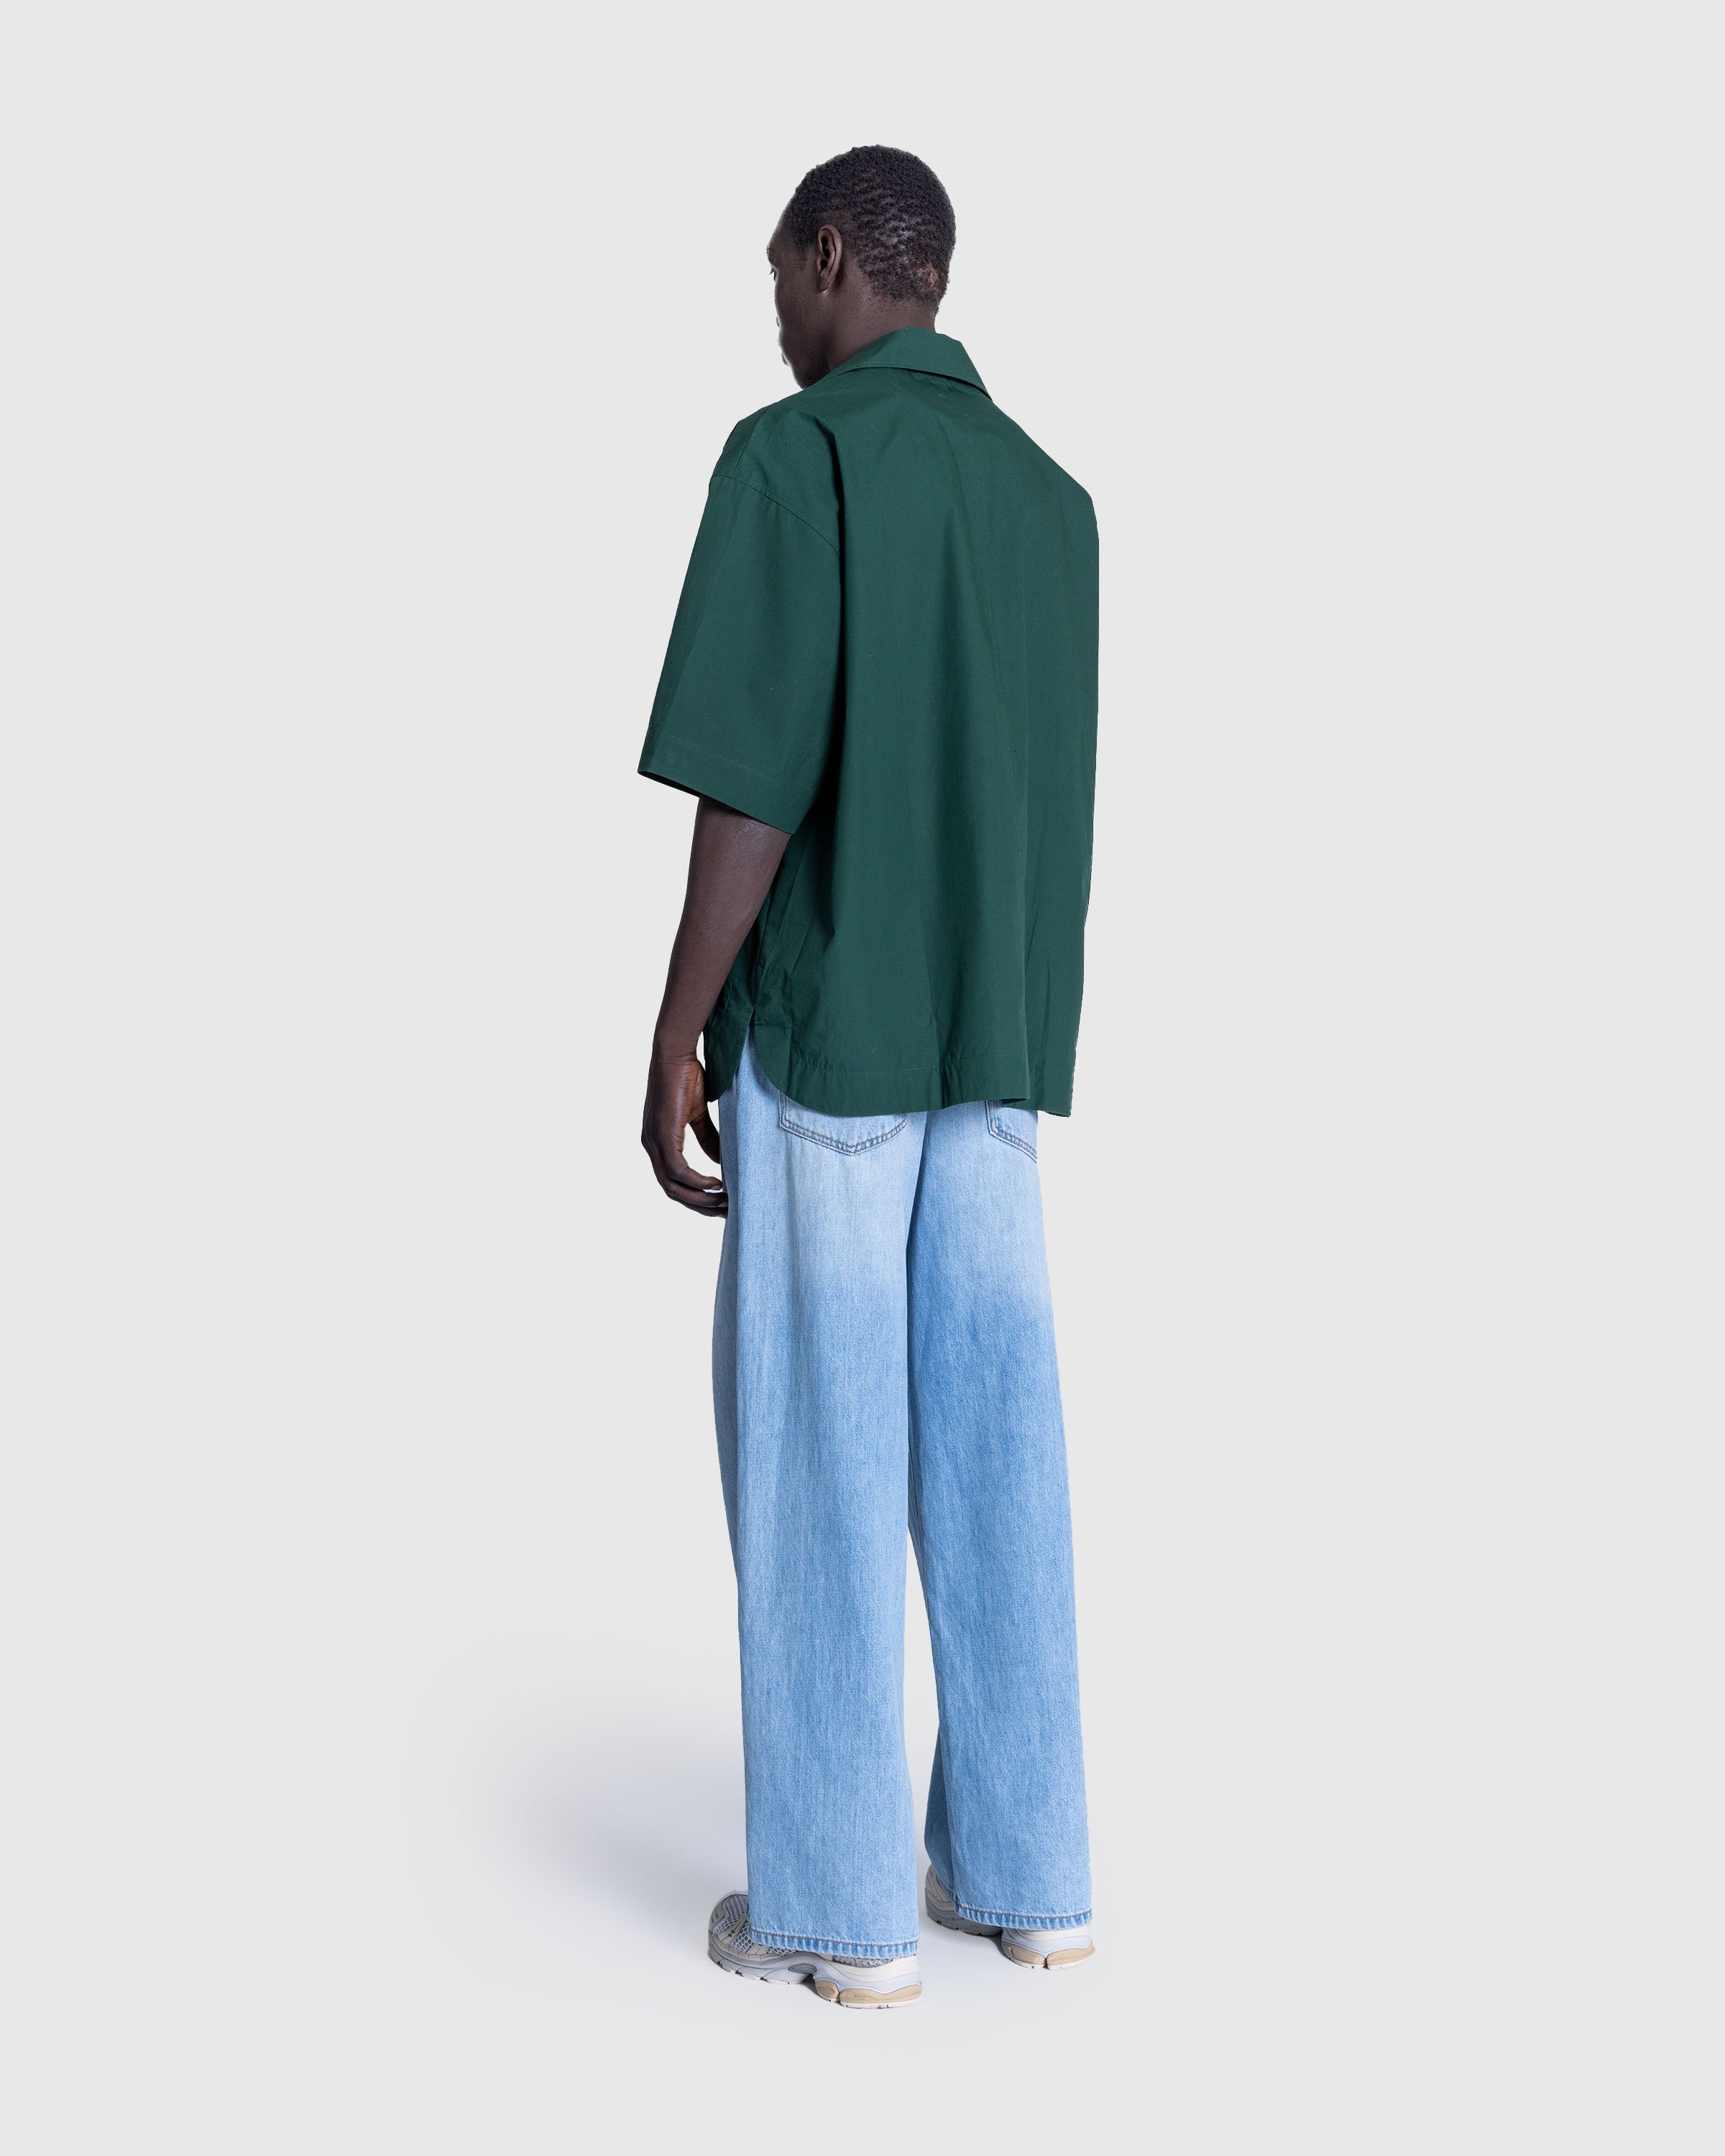 JACQUEMUS - LE HAUT POLO - Clothing - Green - Image 4